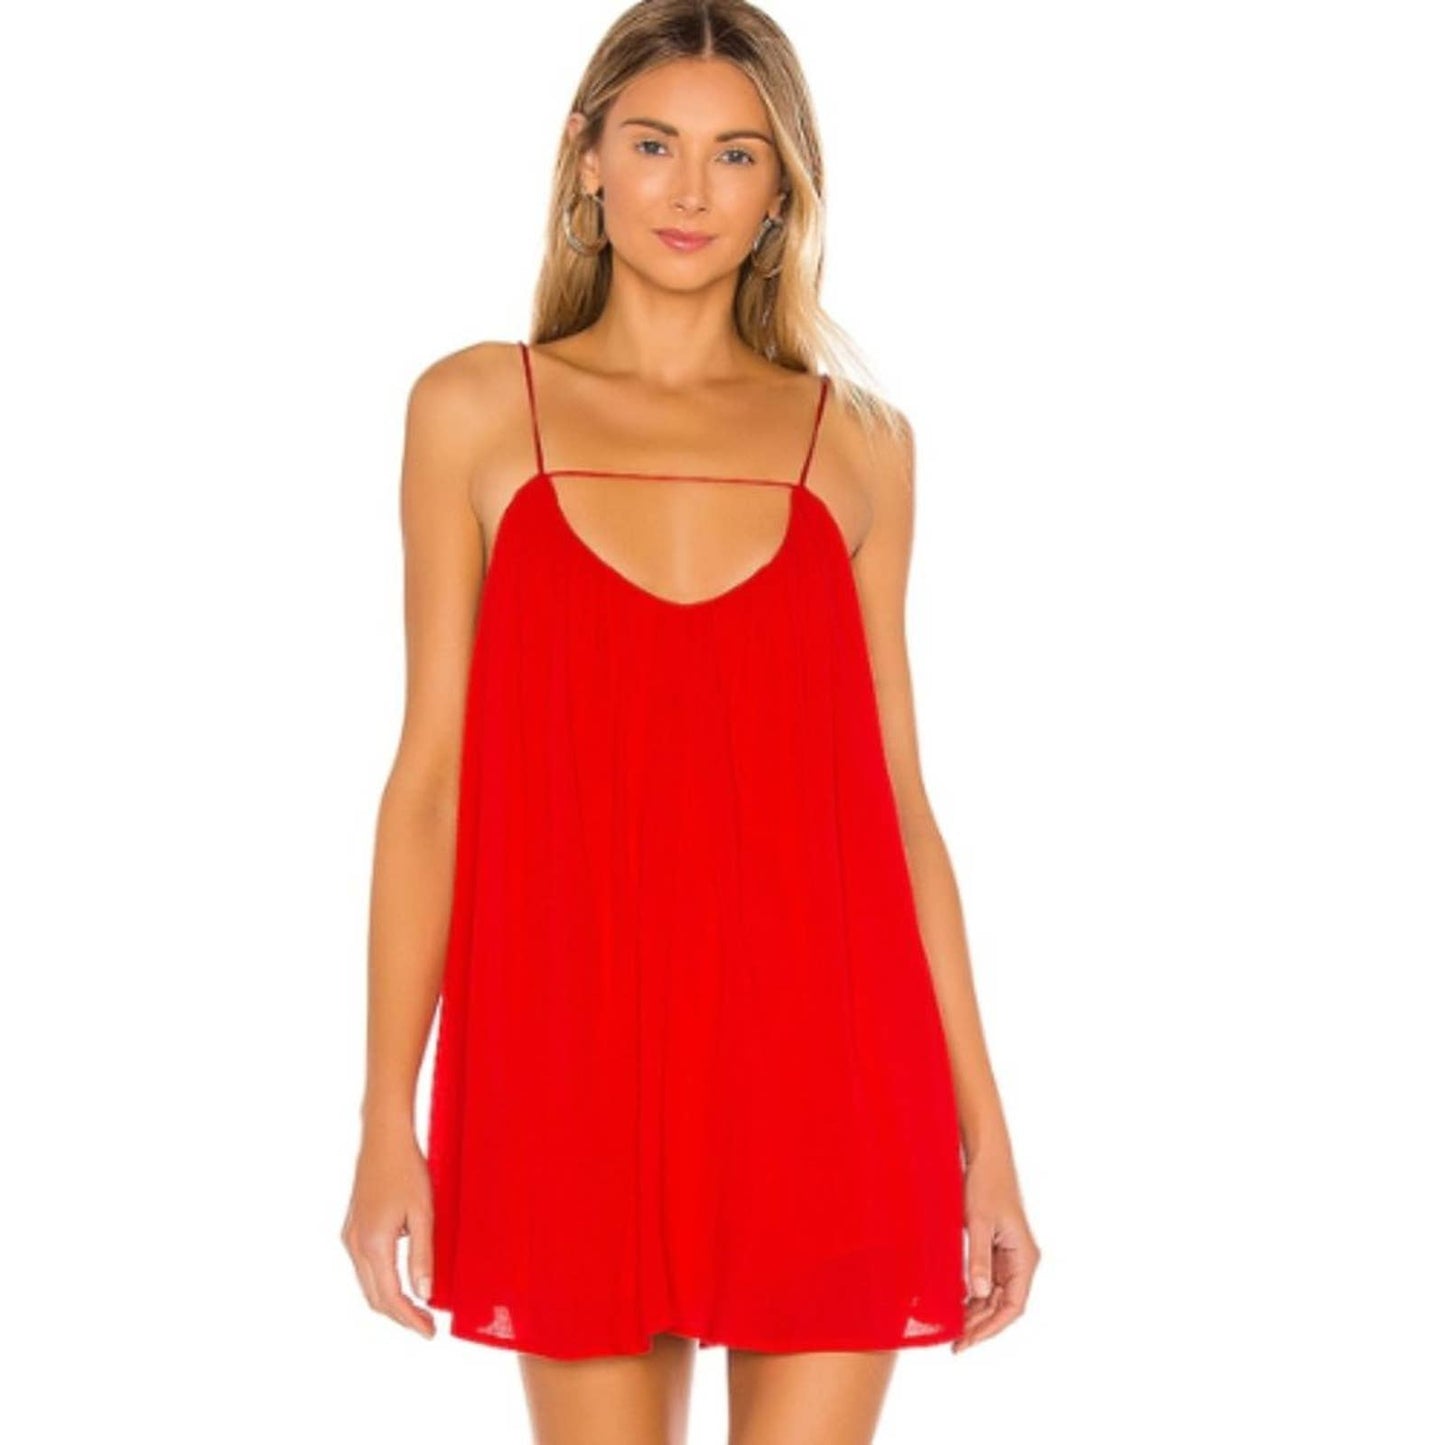 Superdown Sylvia Mini Dress in Red NWT Size Small